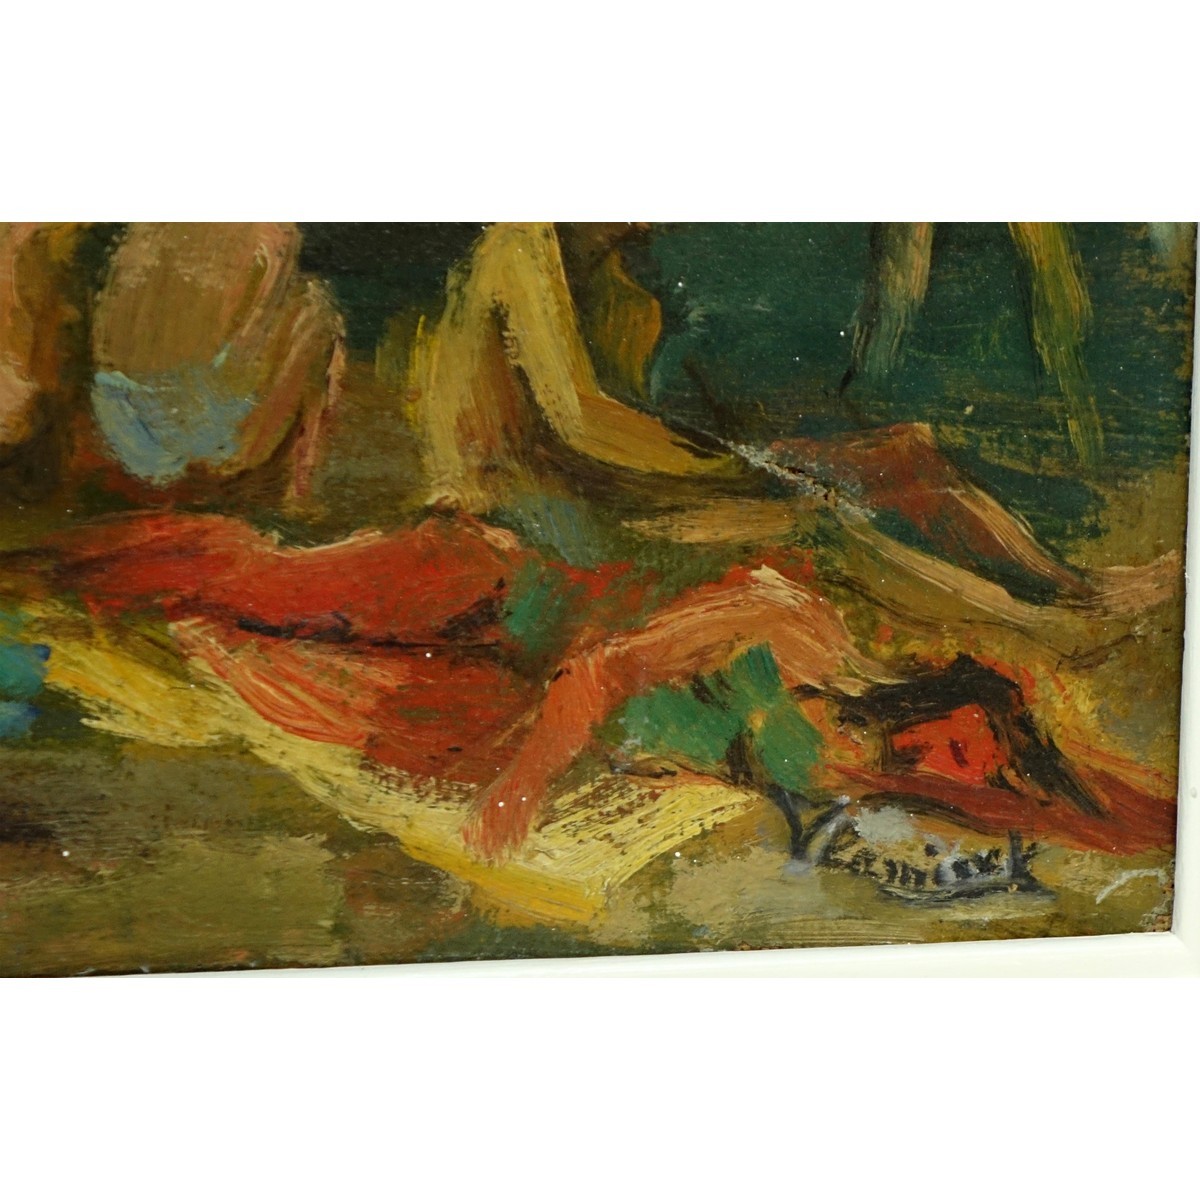 20th Century Oil on Canvas "Beachgoers" Bears signature lower right Vlaminck. Small losses, craquel